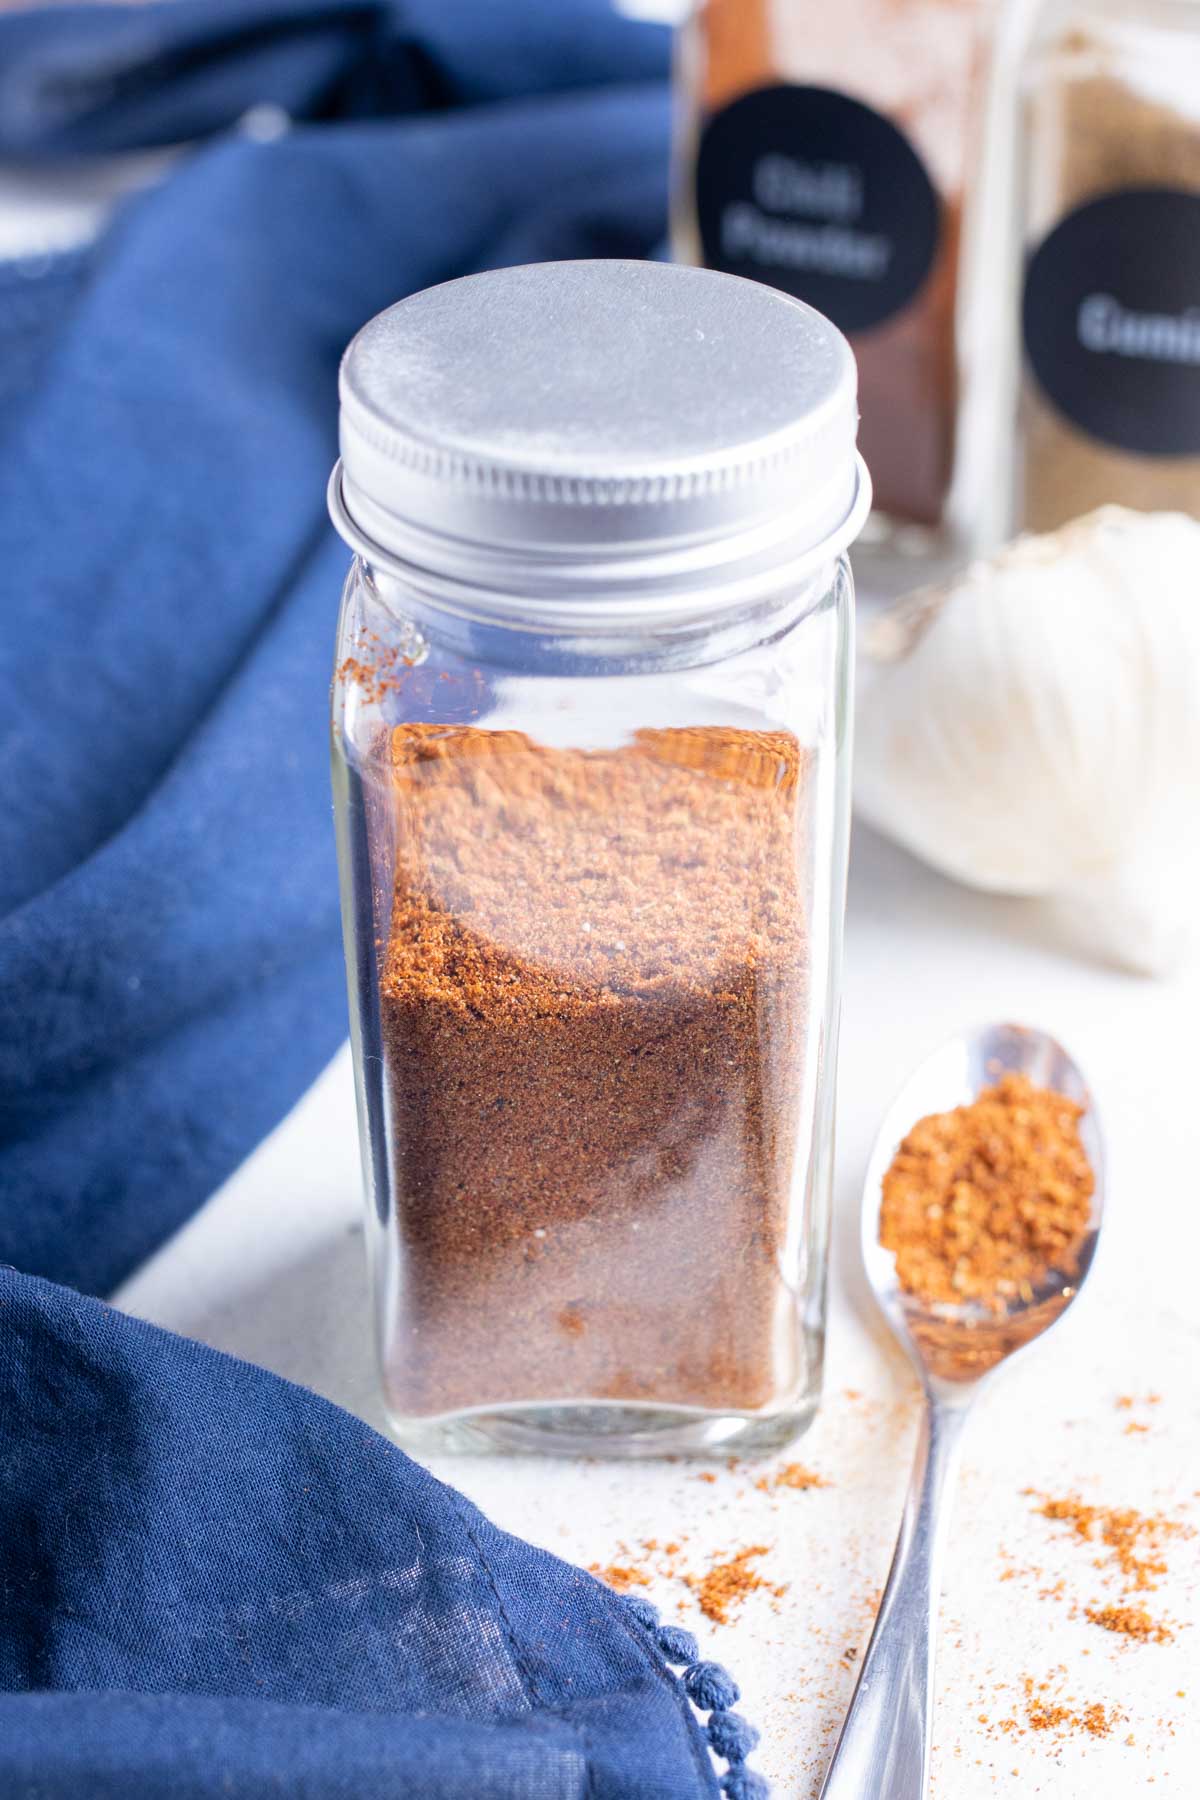 Homemade Fajita Seasoning is stored in a glass jar.